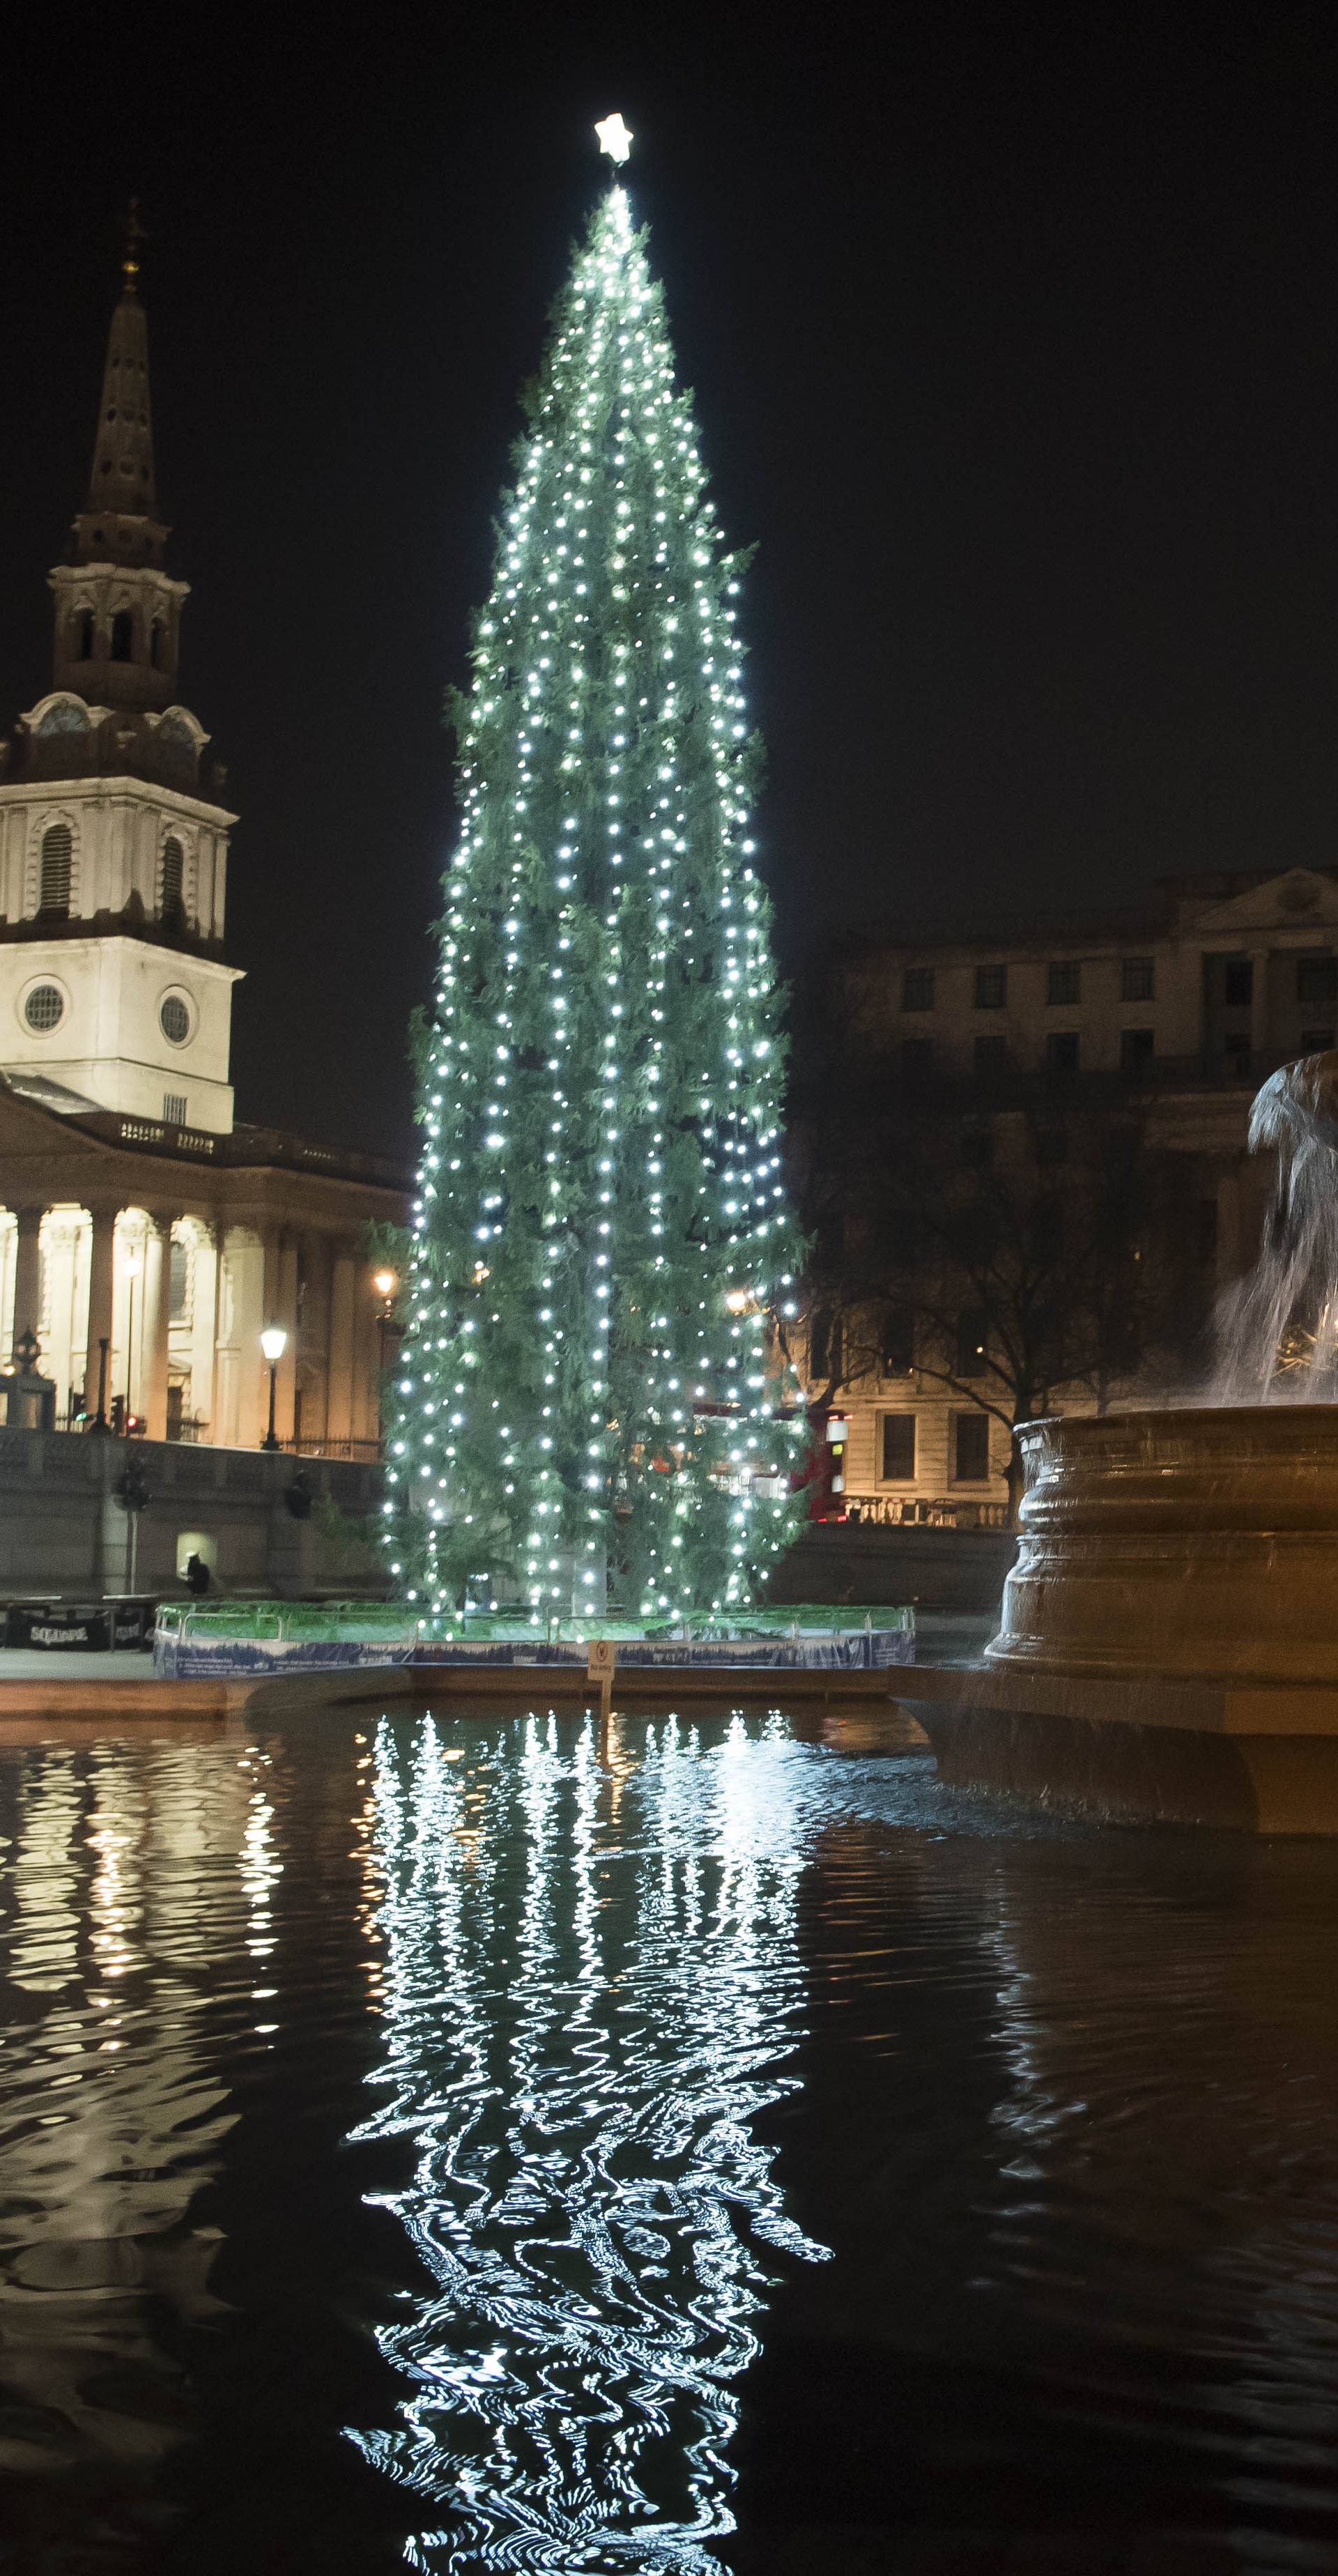 Christmas tree in Trafalgar Square